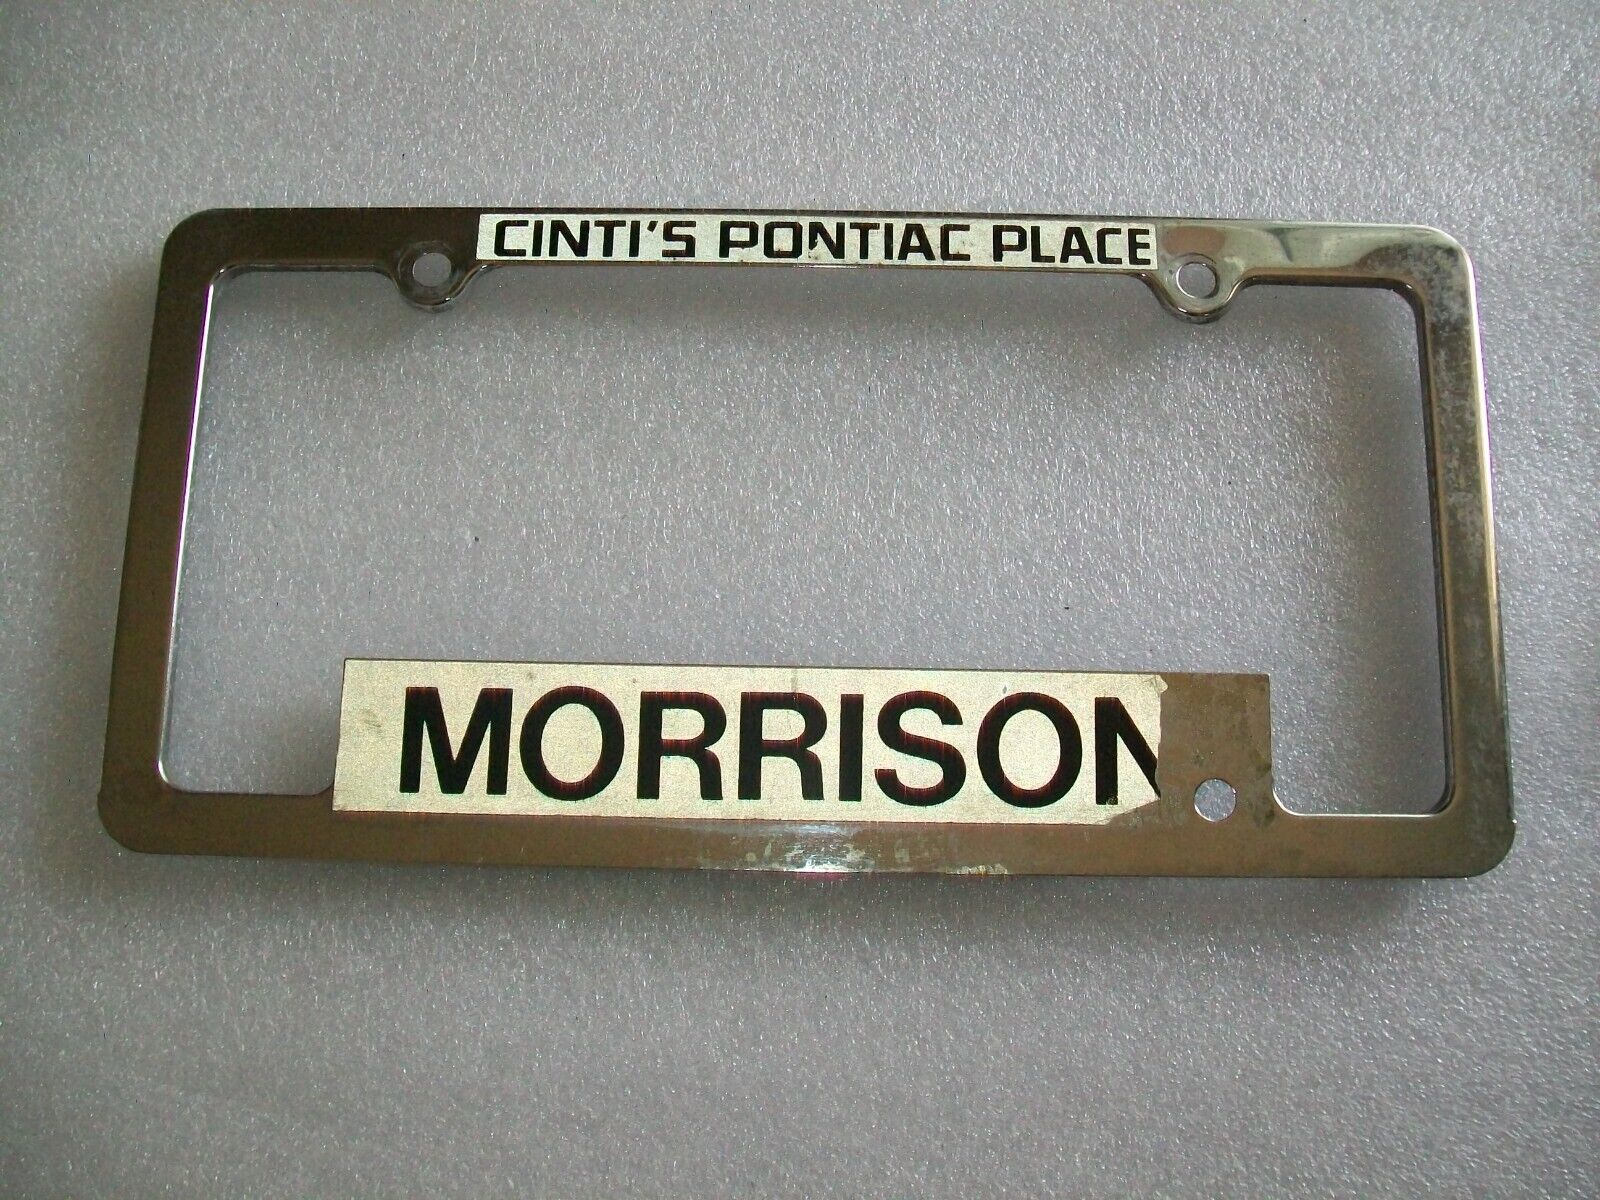 VINT MORRISON CINTIS PONTIAC PLACE, OHIO Dealers Metal License Plate Frame 1900s